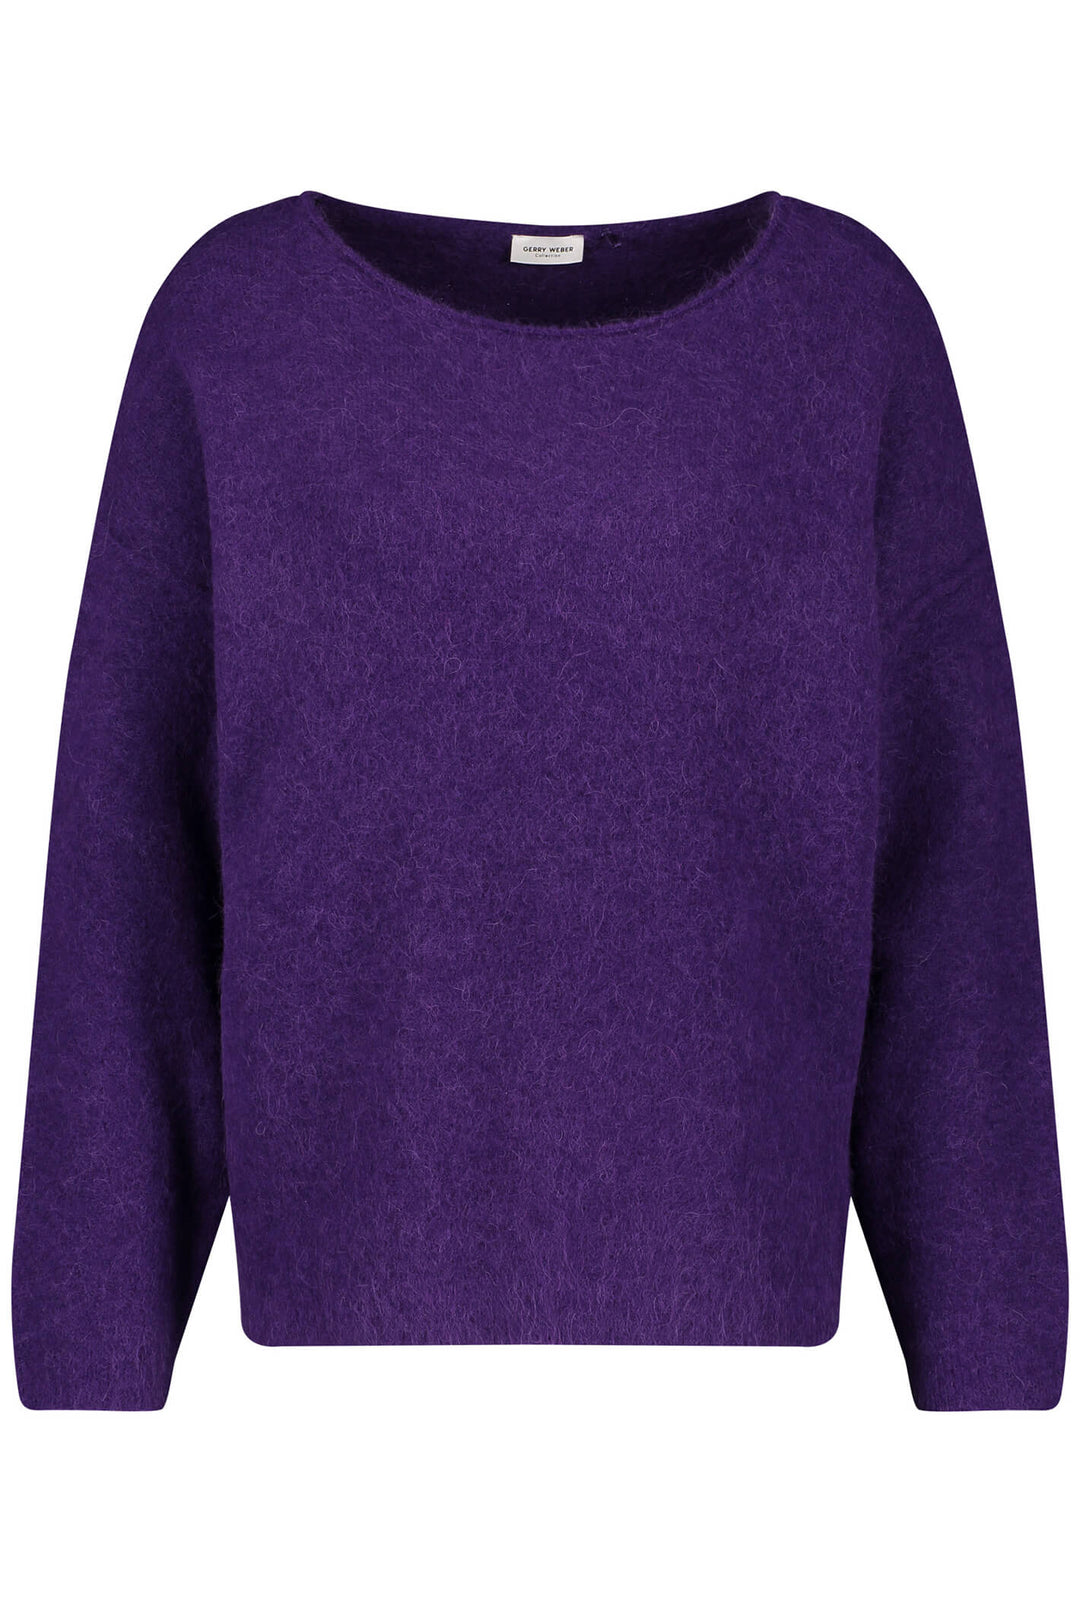 Gerry Weber 271045 Dark Violet Wool Blend Knitted Jumper - Experience Boutique